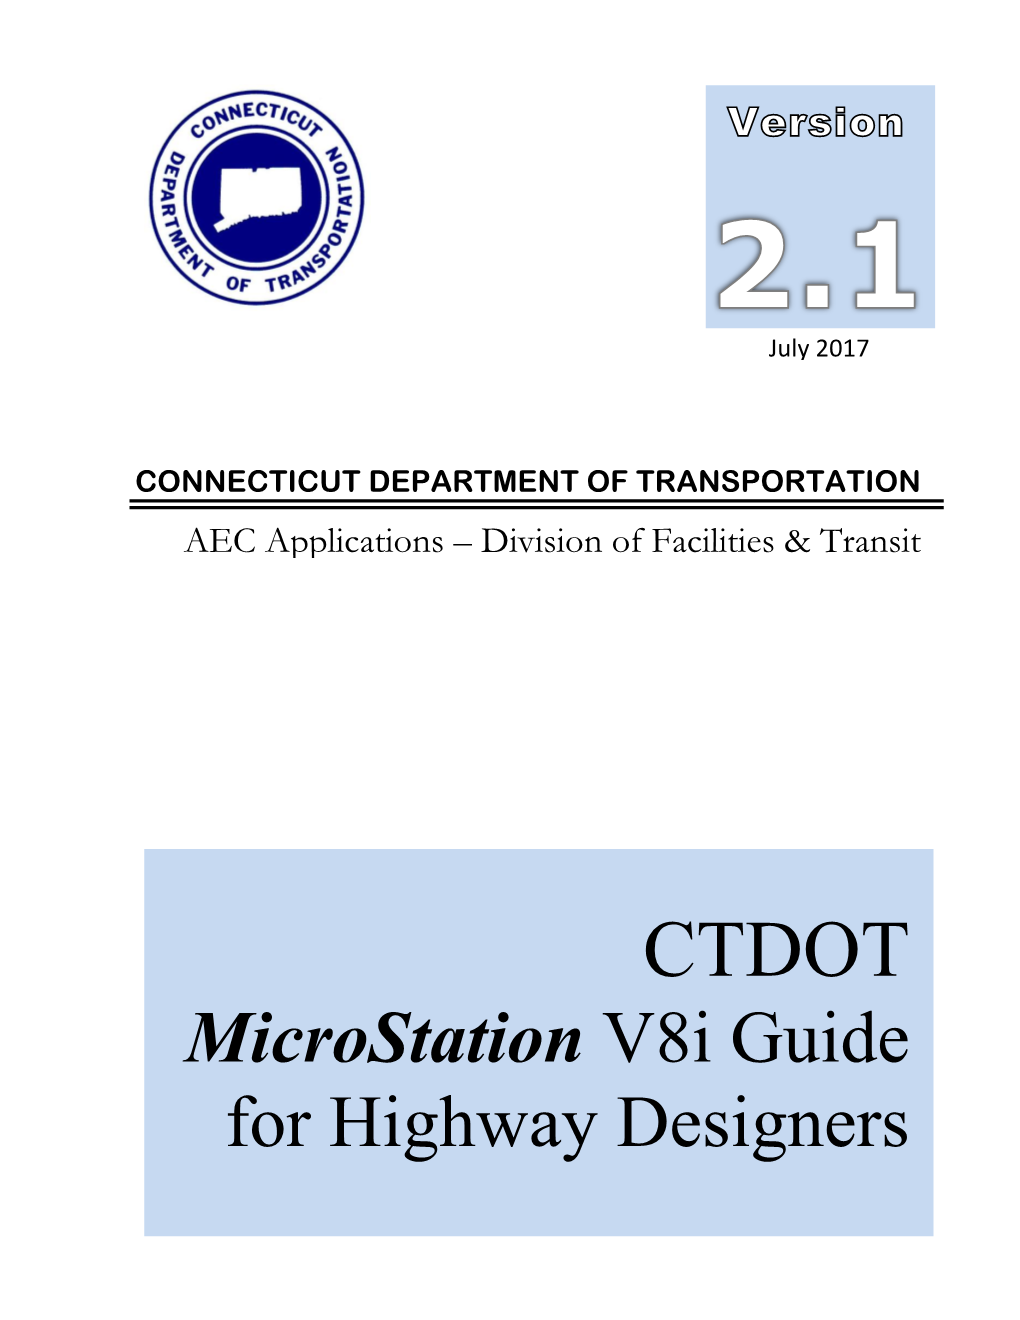 Microstation V8i Guide for Highway Designers